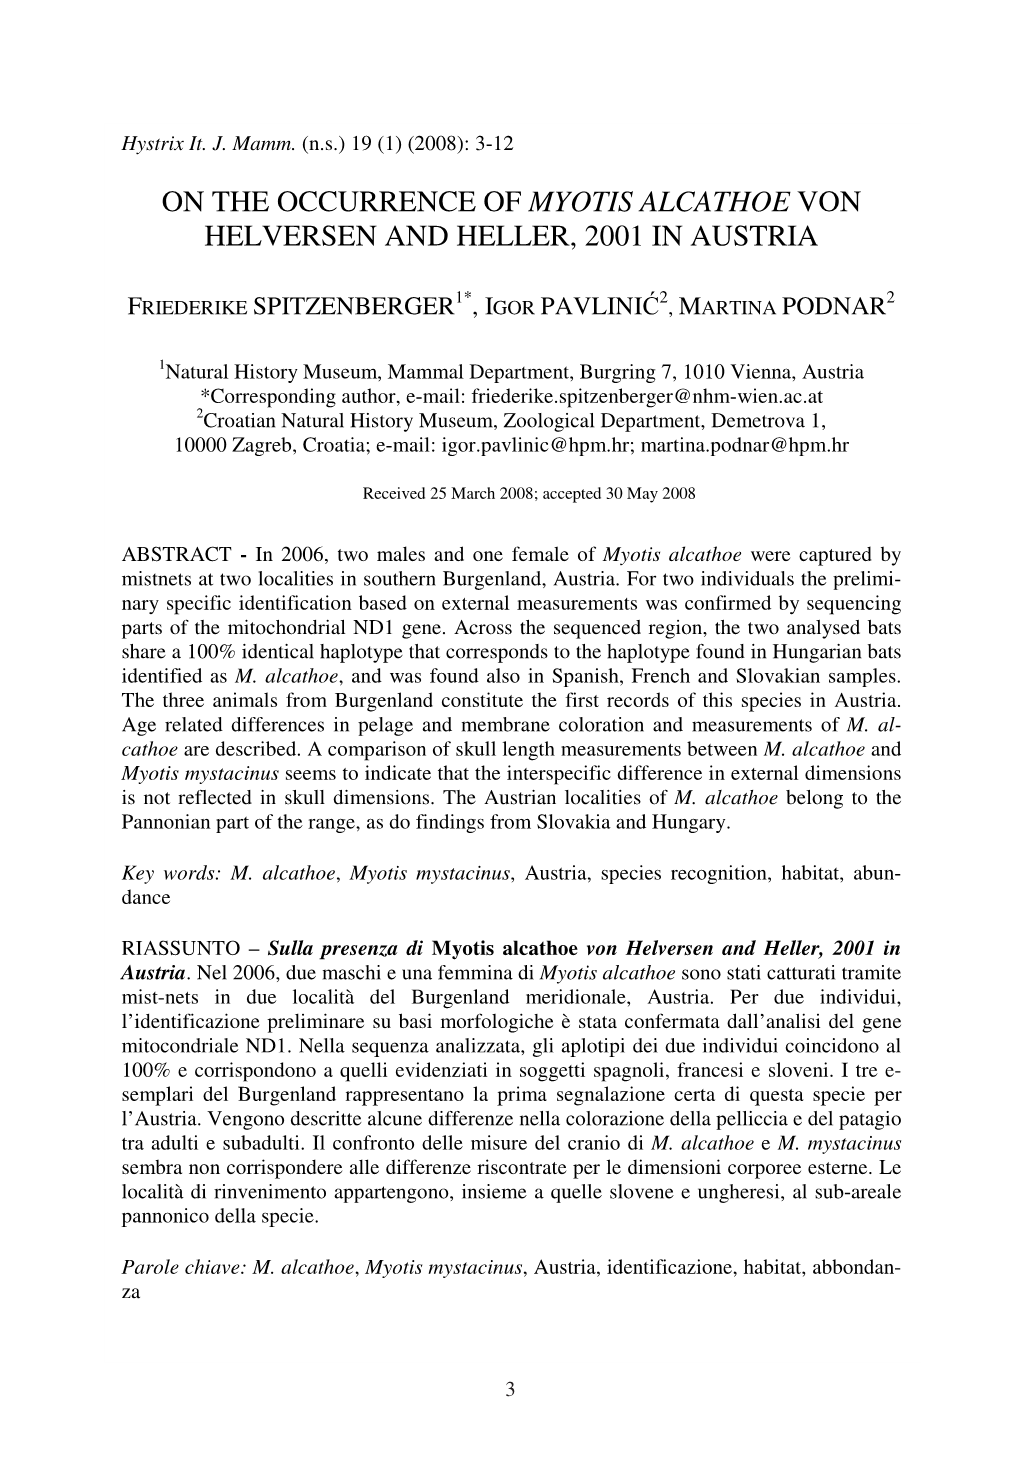 On the Occurrence of Myotis Alcathoe Von Helversen and Heller, 2001 in Austria